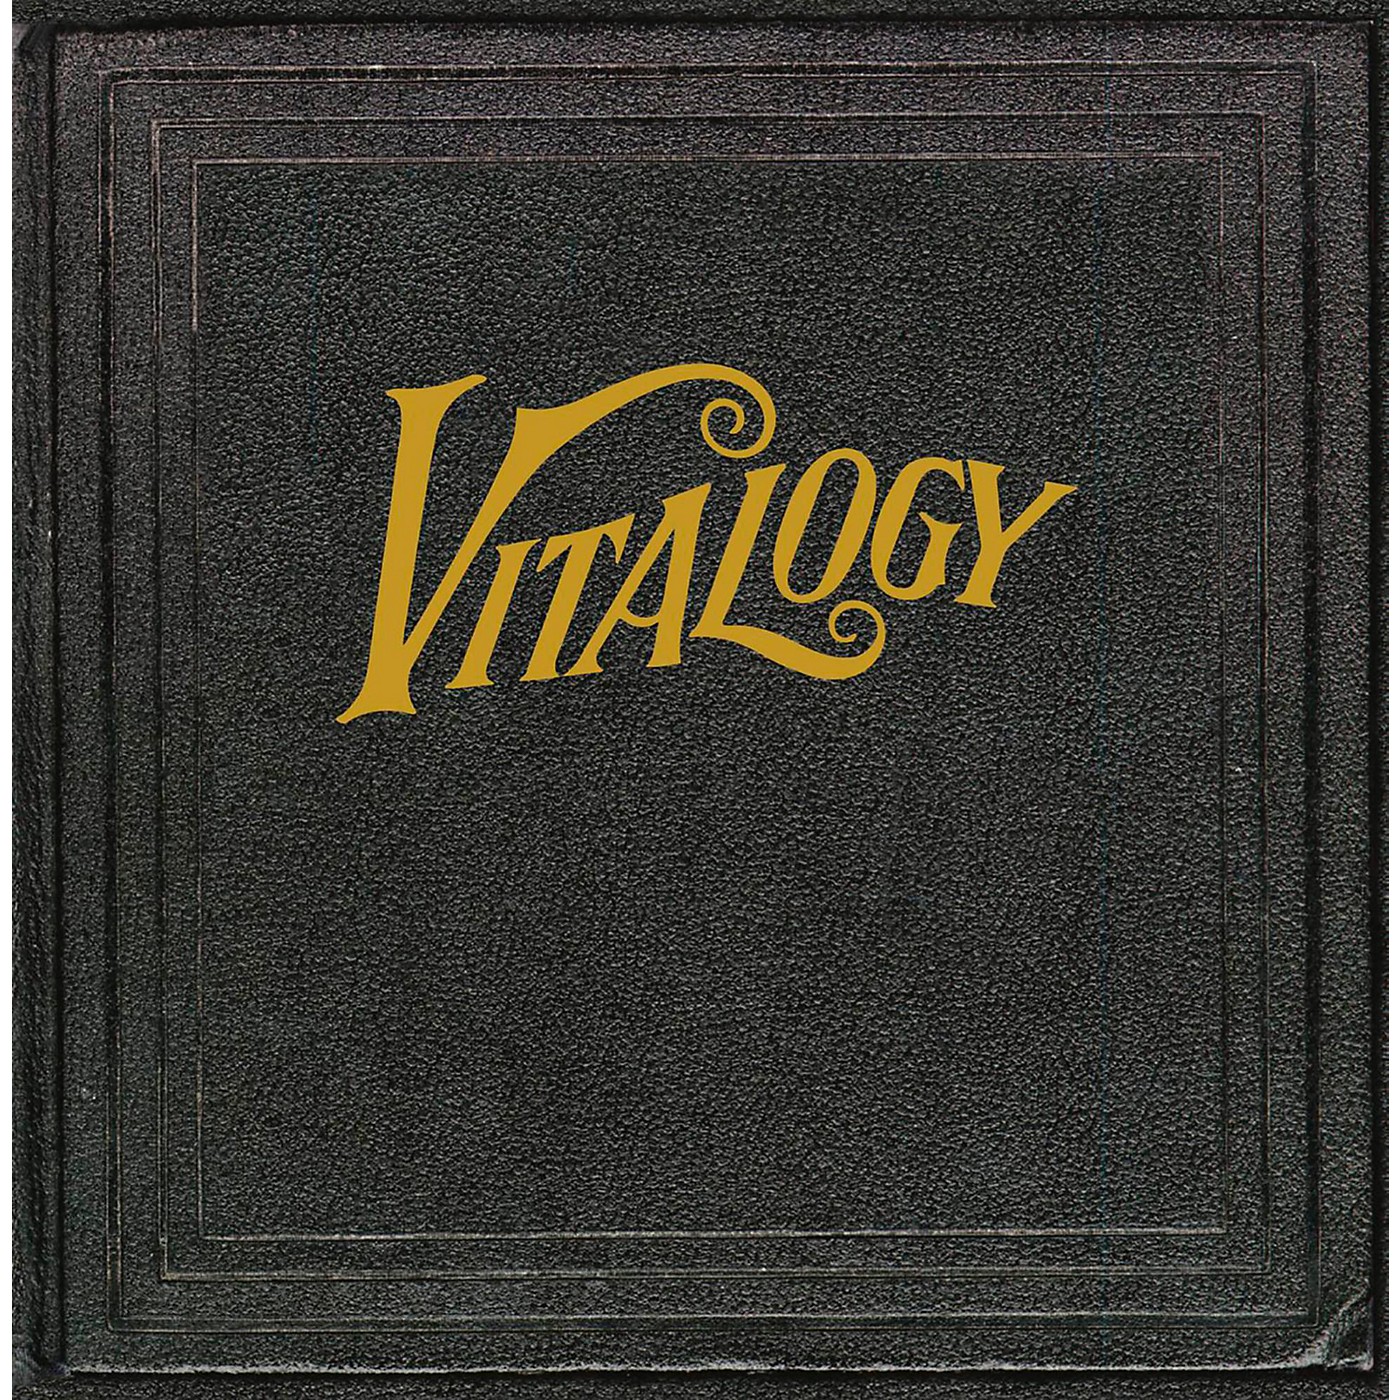 Sony Pearl Jam - Vitalogy thumbnail